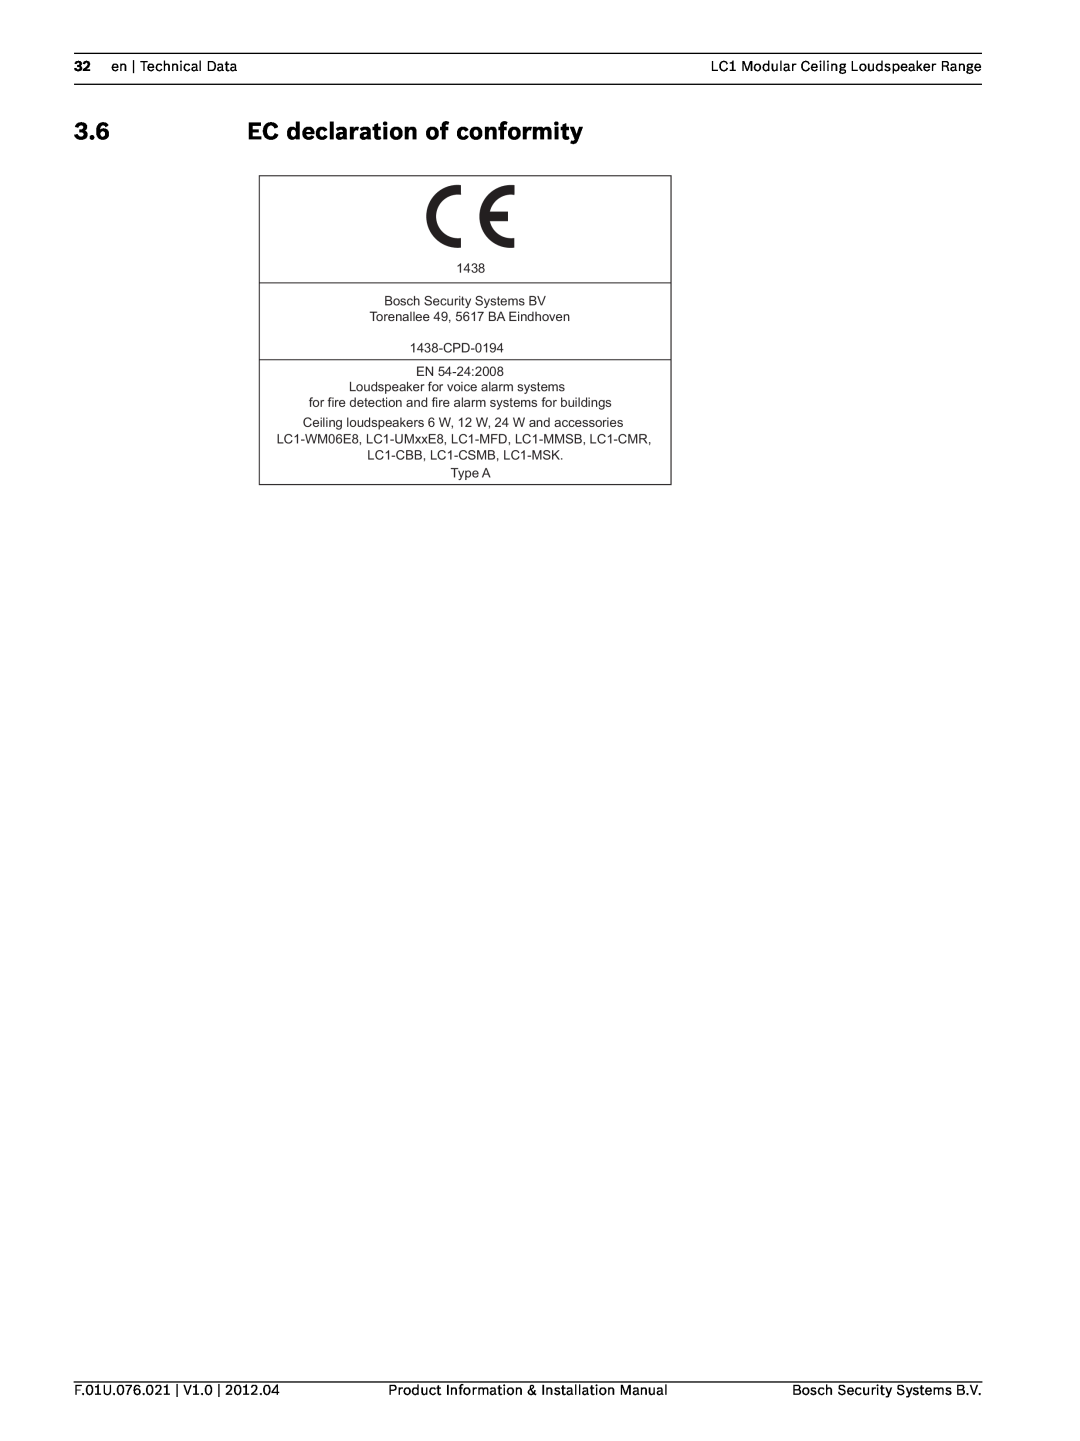 Bosch Appliances LC1 installation manual EC declaration of conformity 